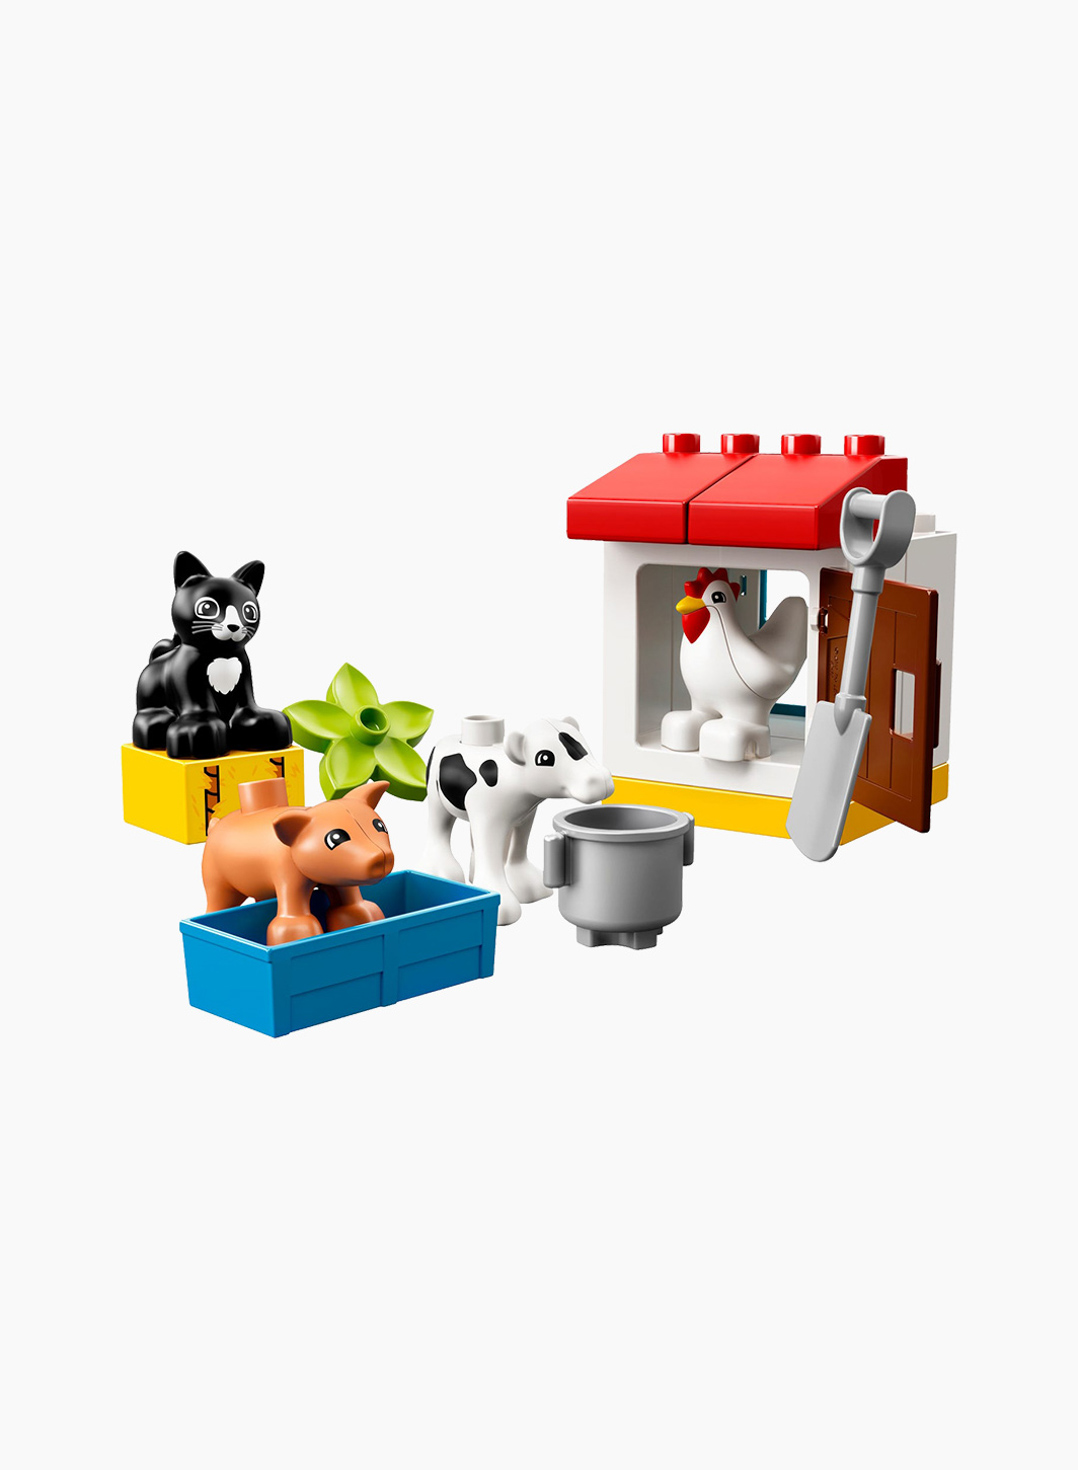 Lego Duplo Constructor Farm Animals